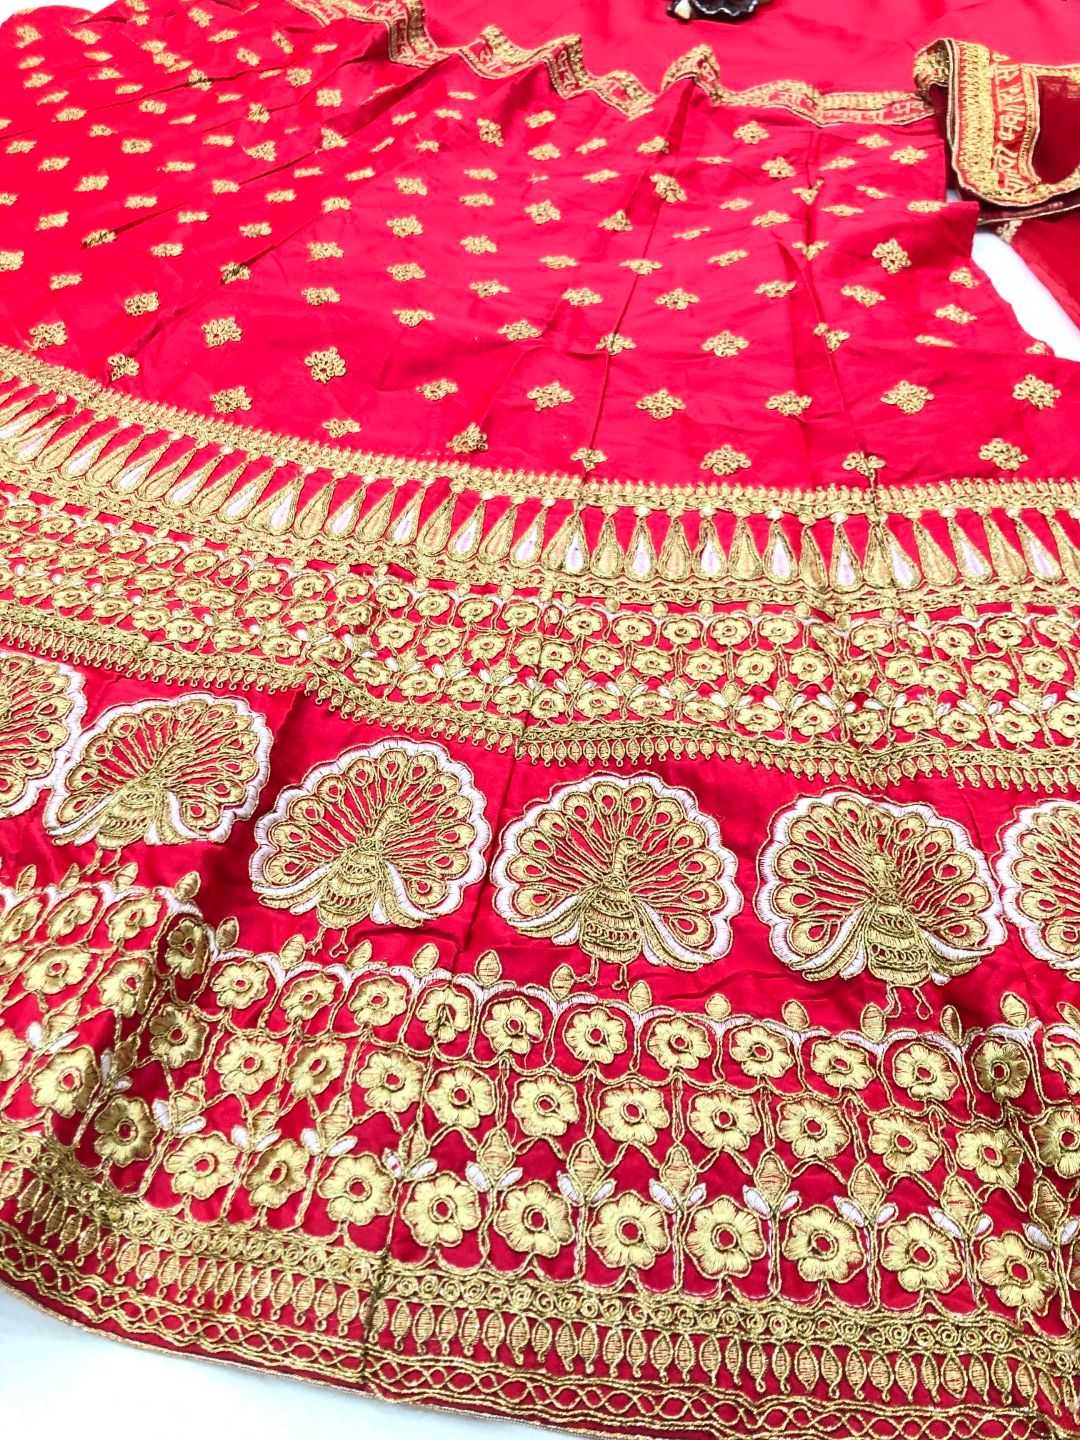 Red Lehenga Choli In Malai Satin Silk With Embroidery Work